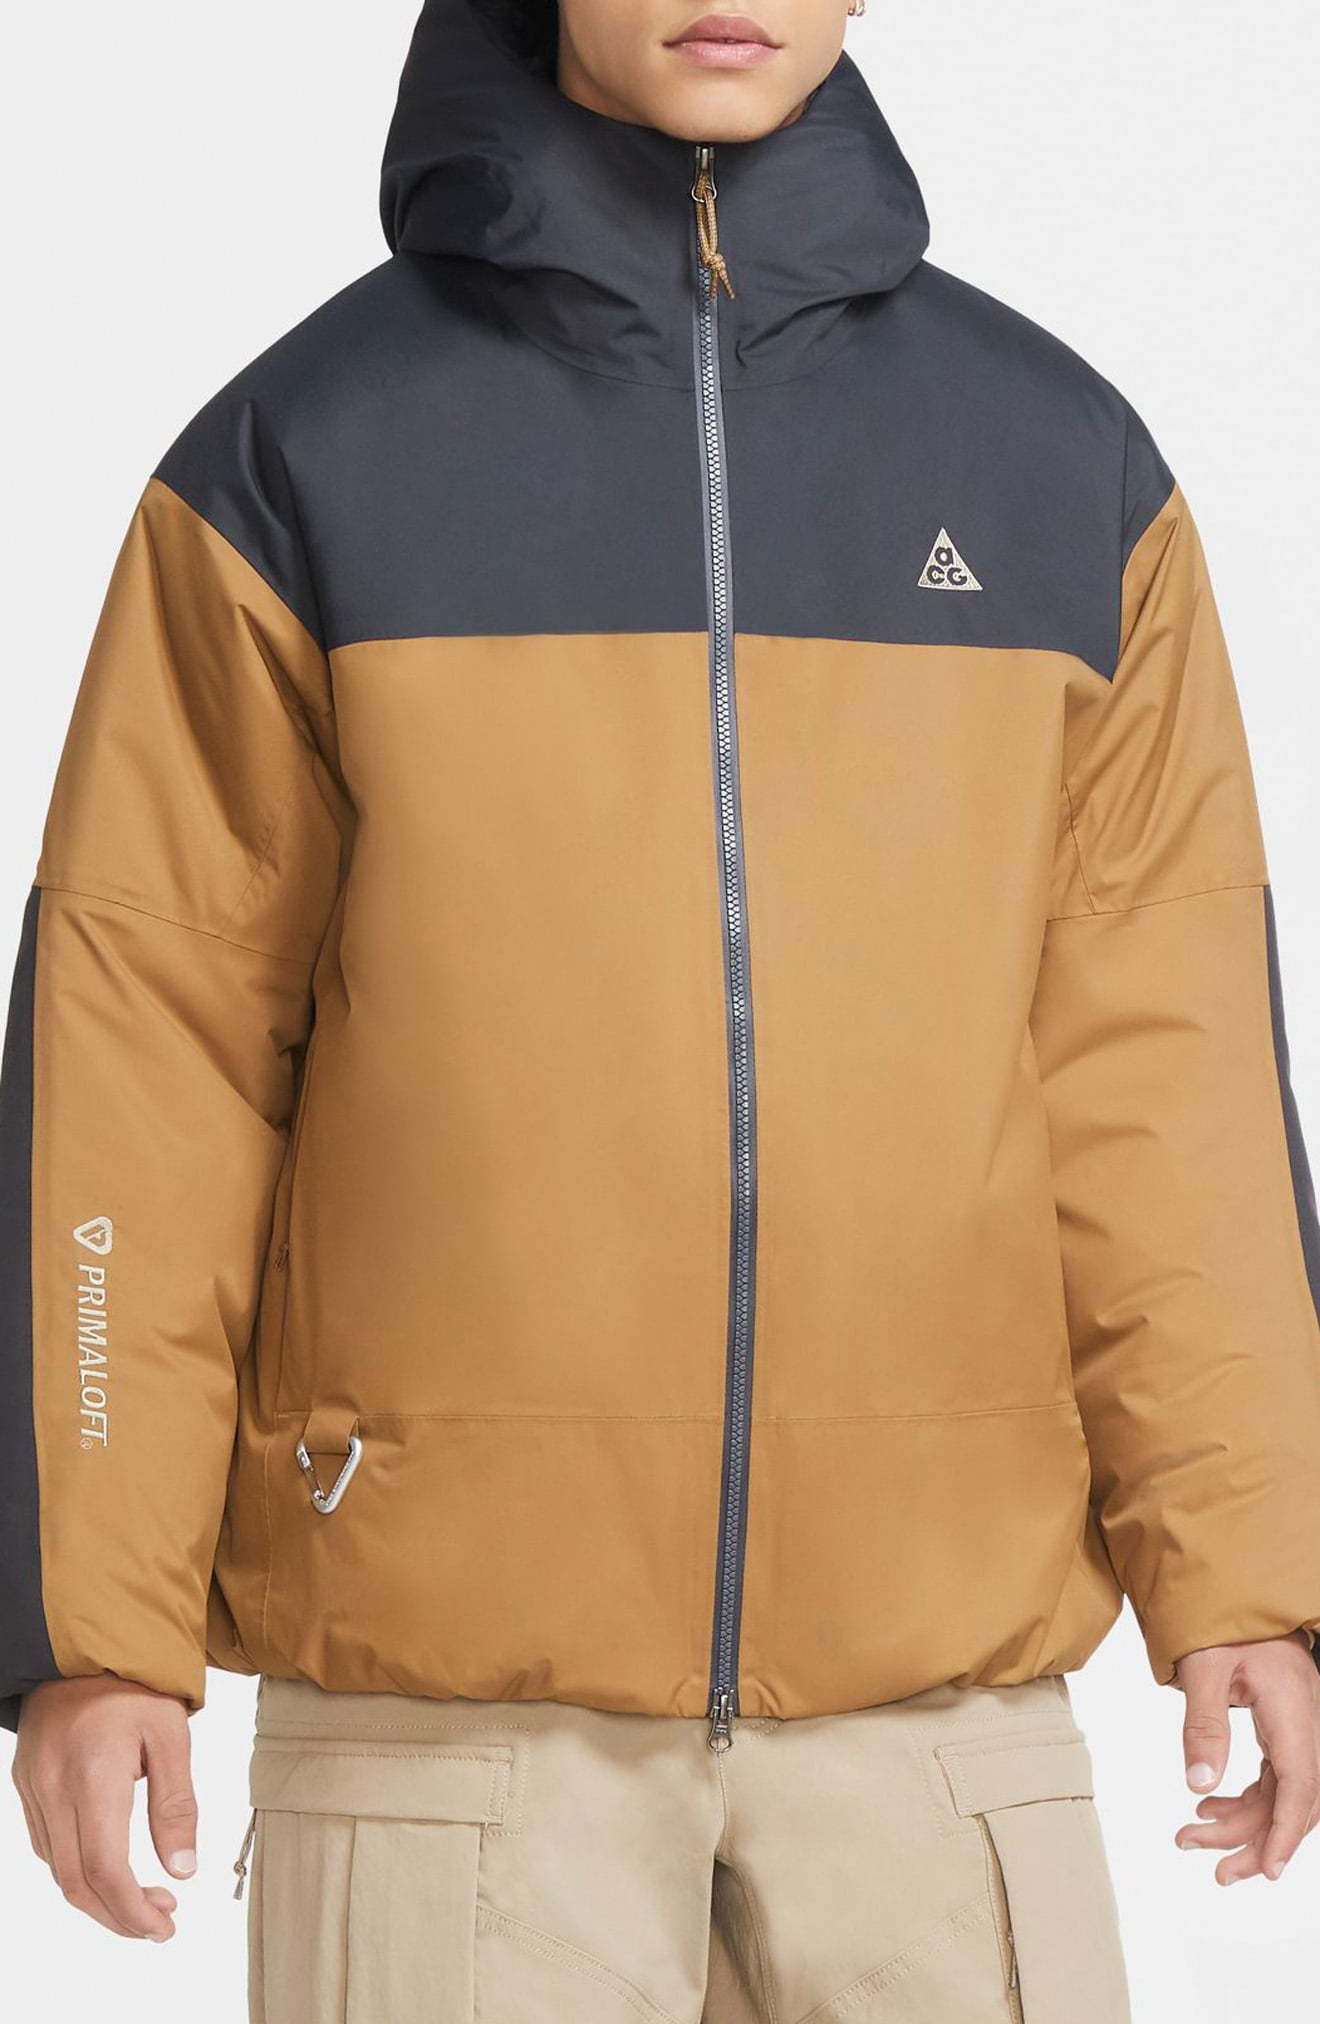 Nike Acg 4th Horseman Primaloft Waterproof Puffer Jacket, $239